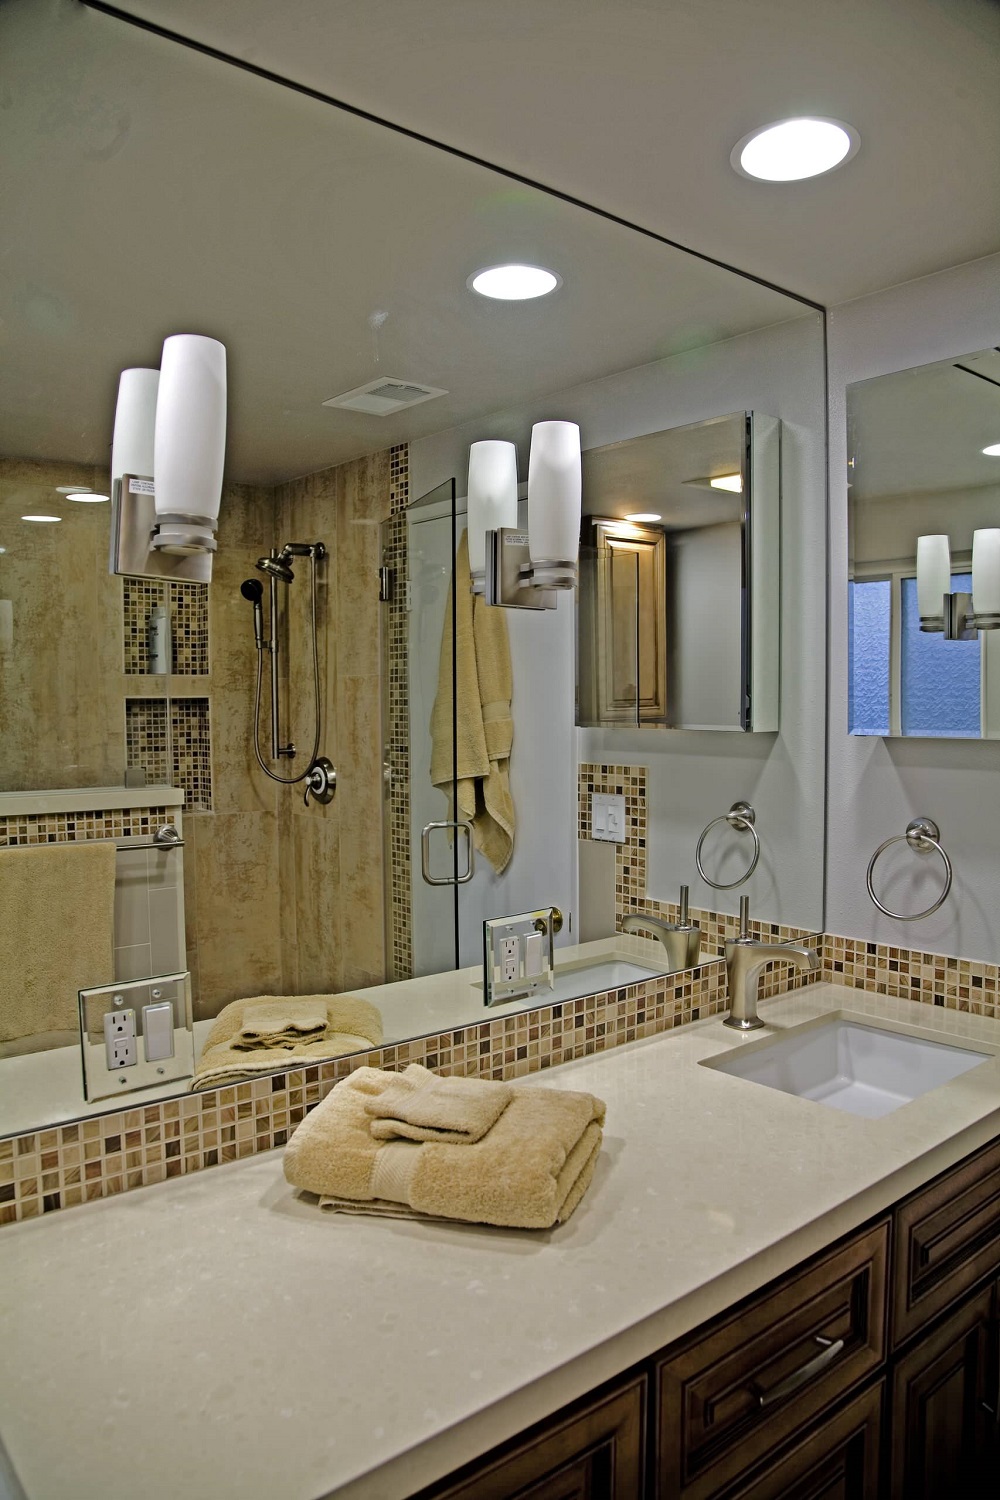 Neat corner bathroom vanity ideas you will find useful